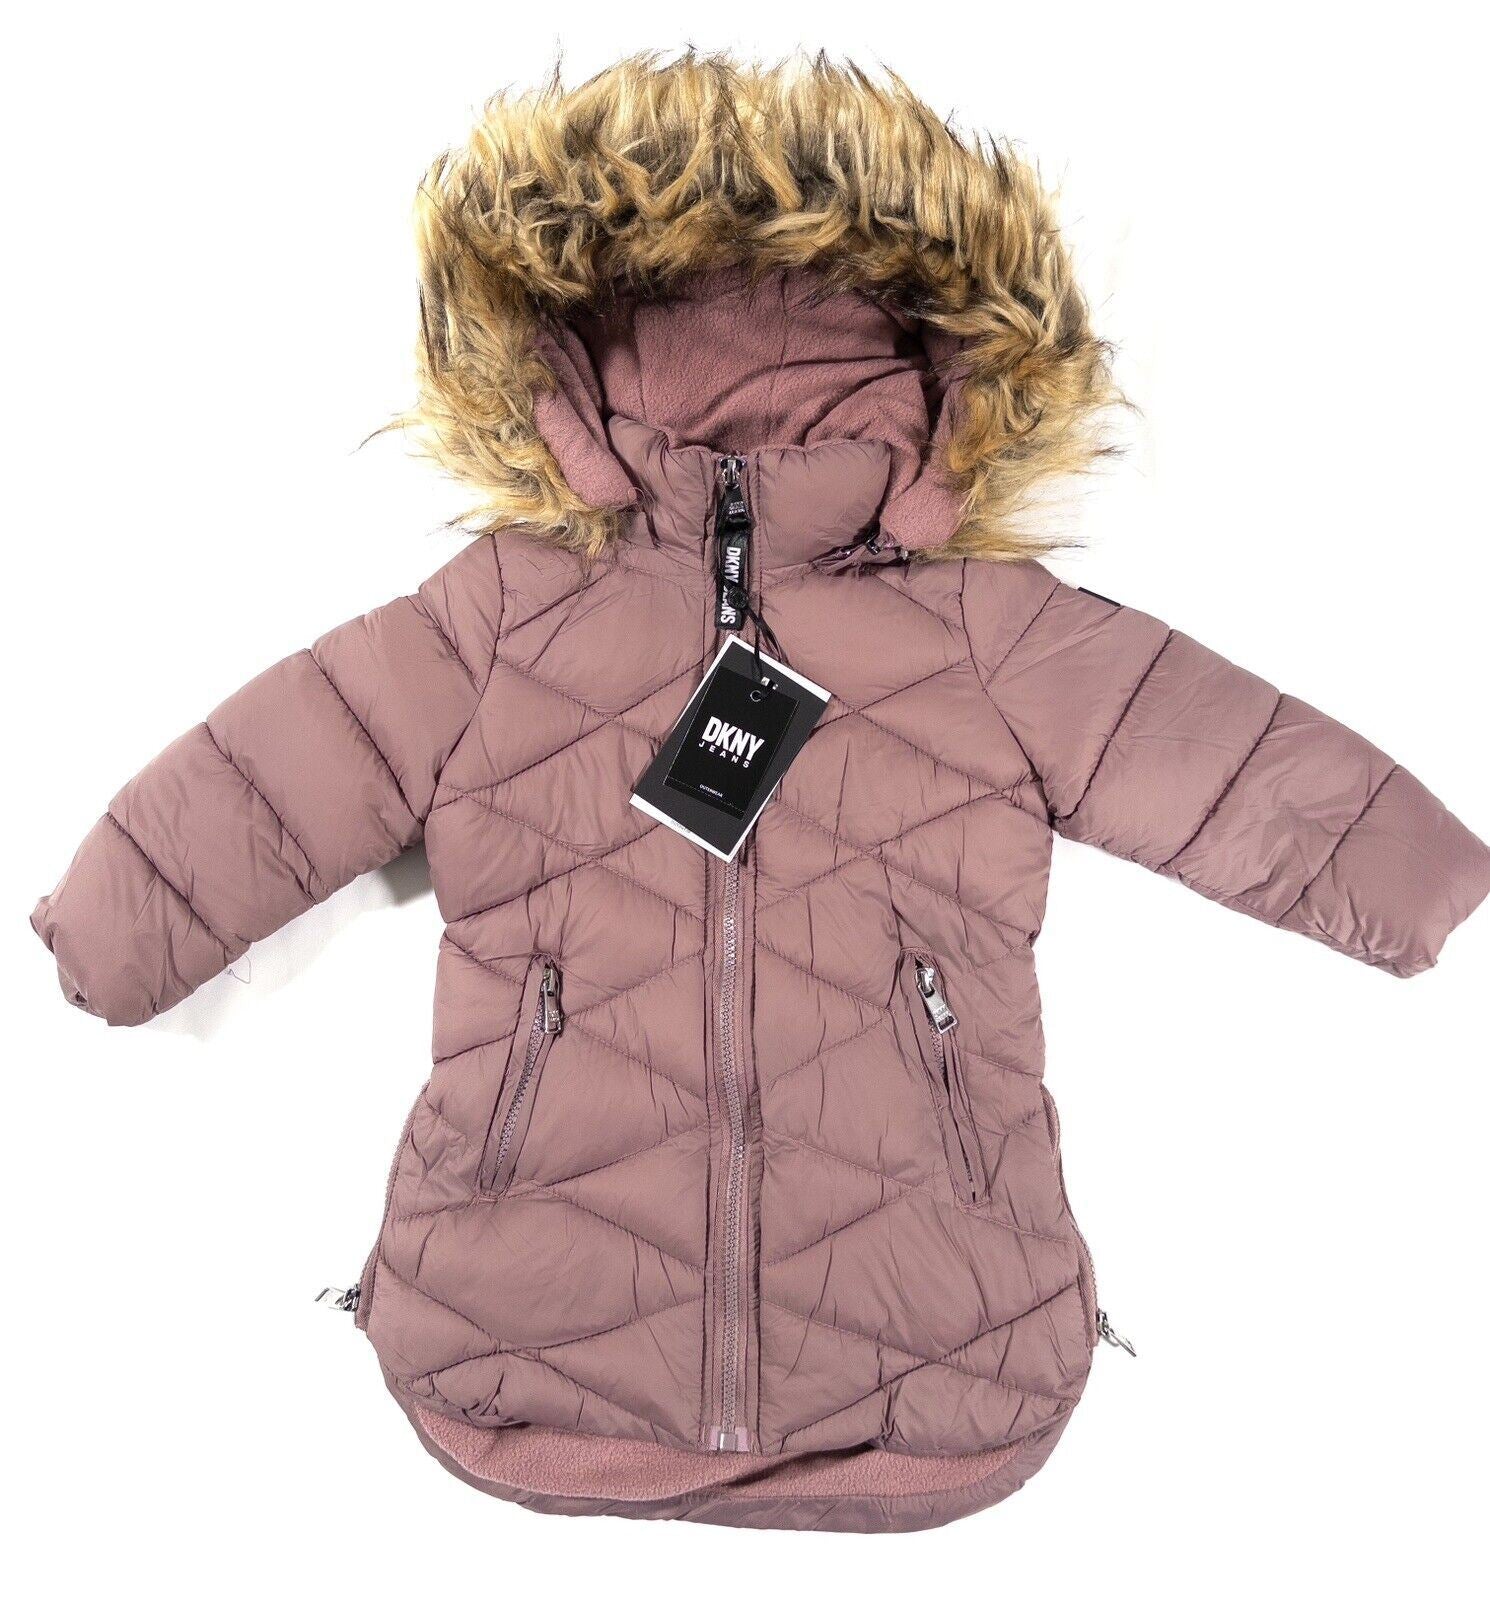 DKNY JEANS Infant Kids Girls Purple Hooded Puffer Coat Size UK 2 Years